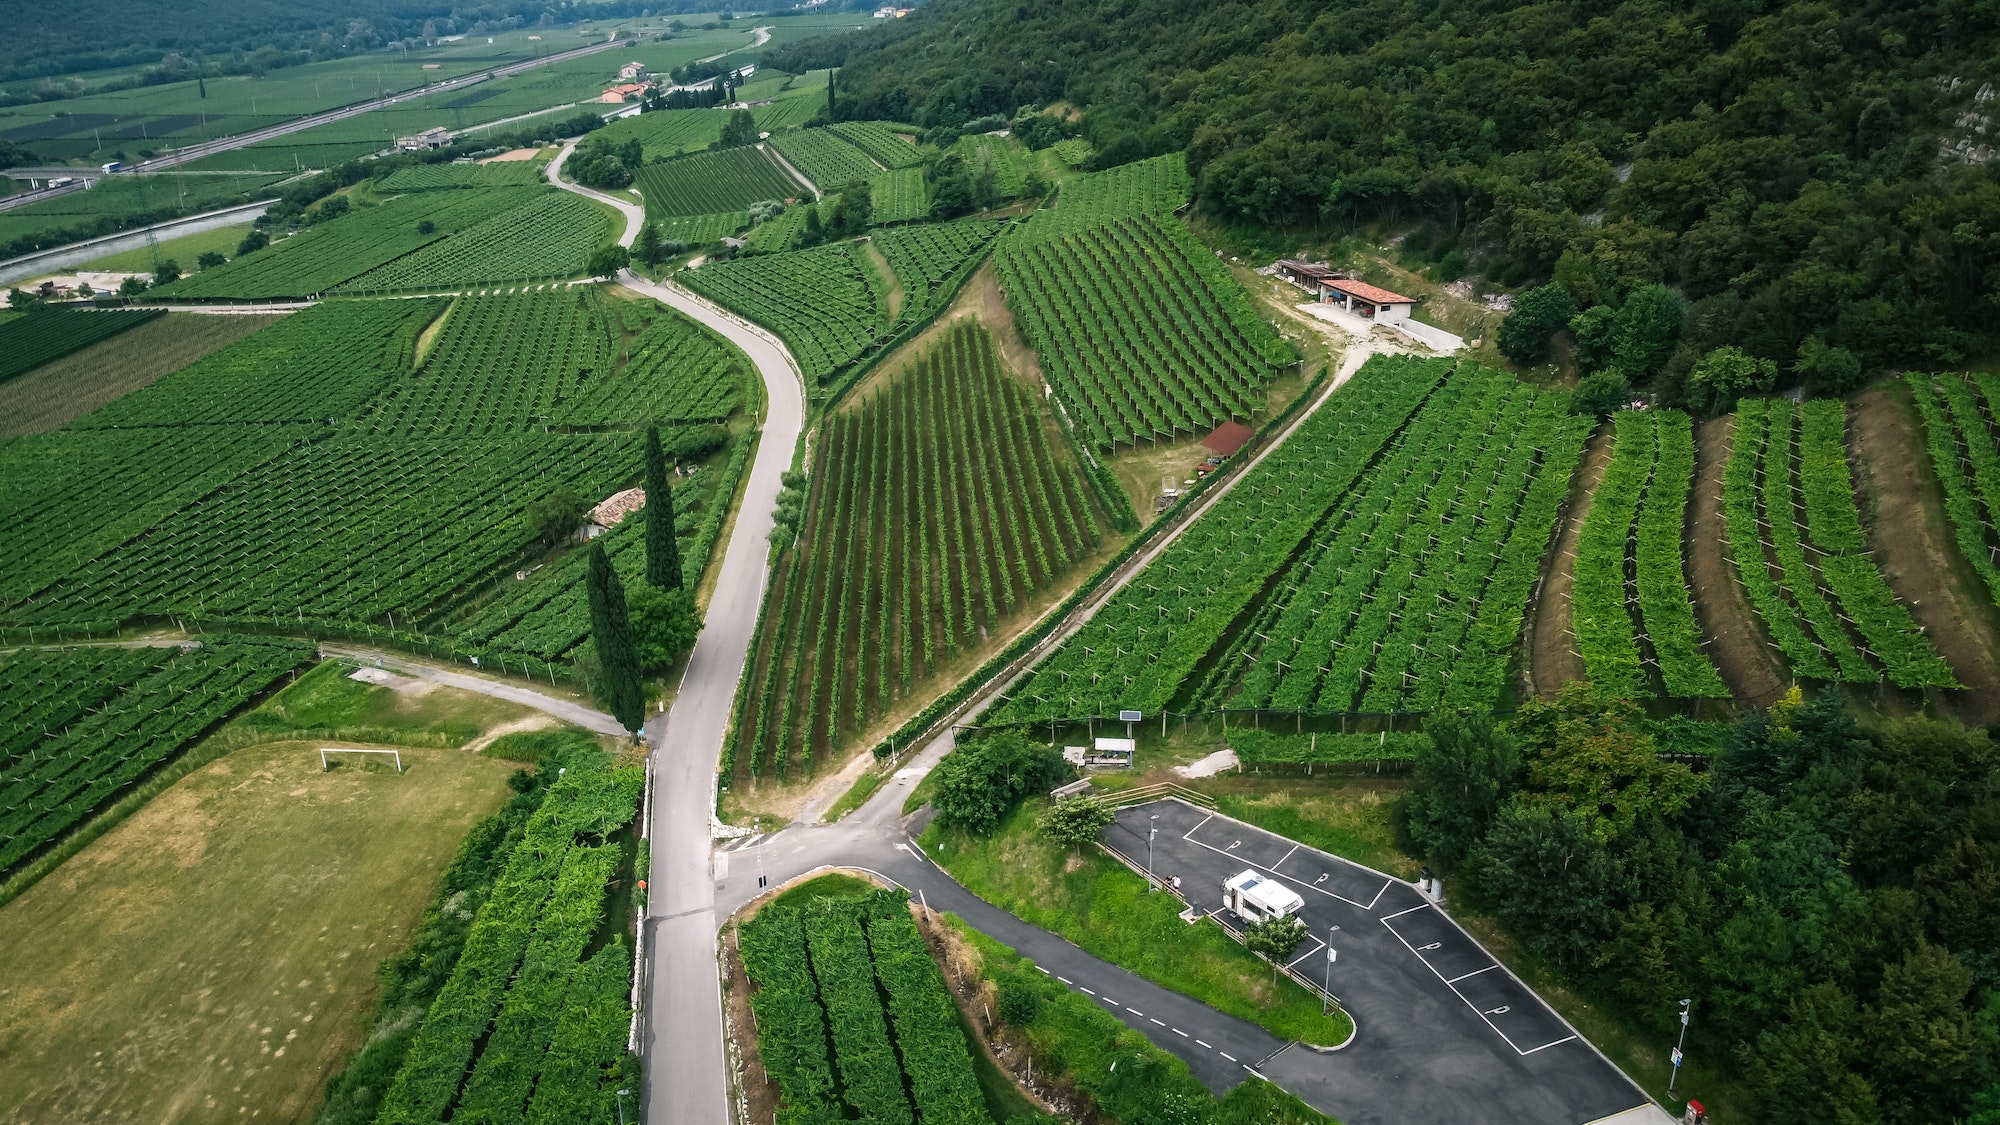 Aerial view of vineyard in Italy